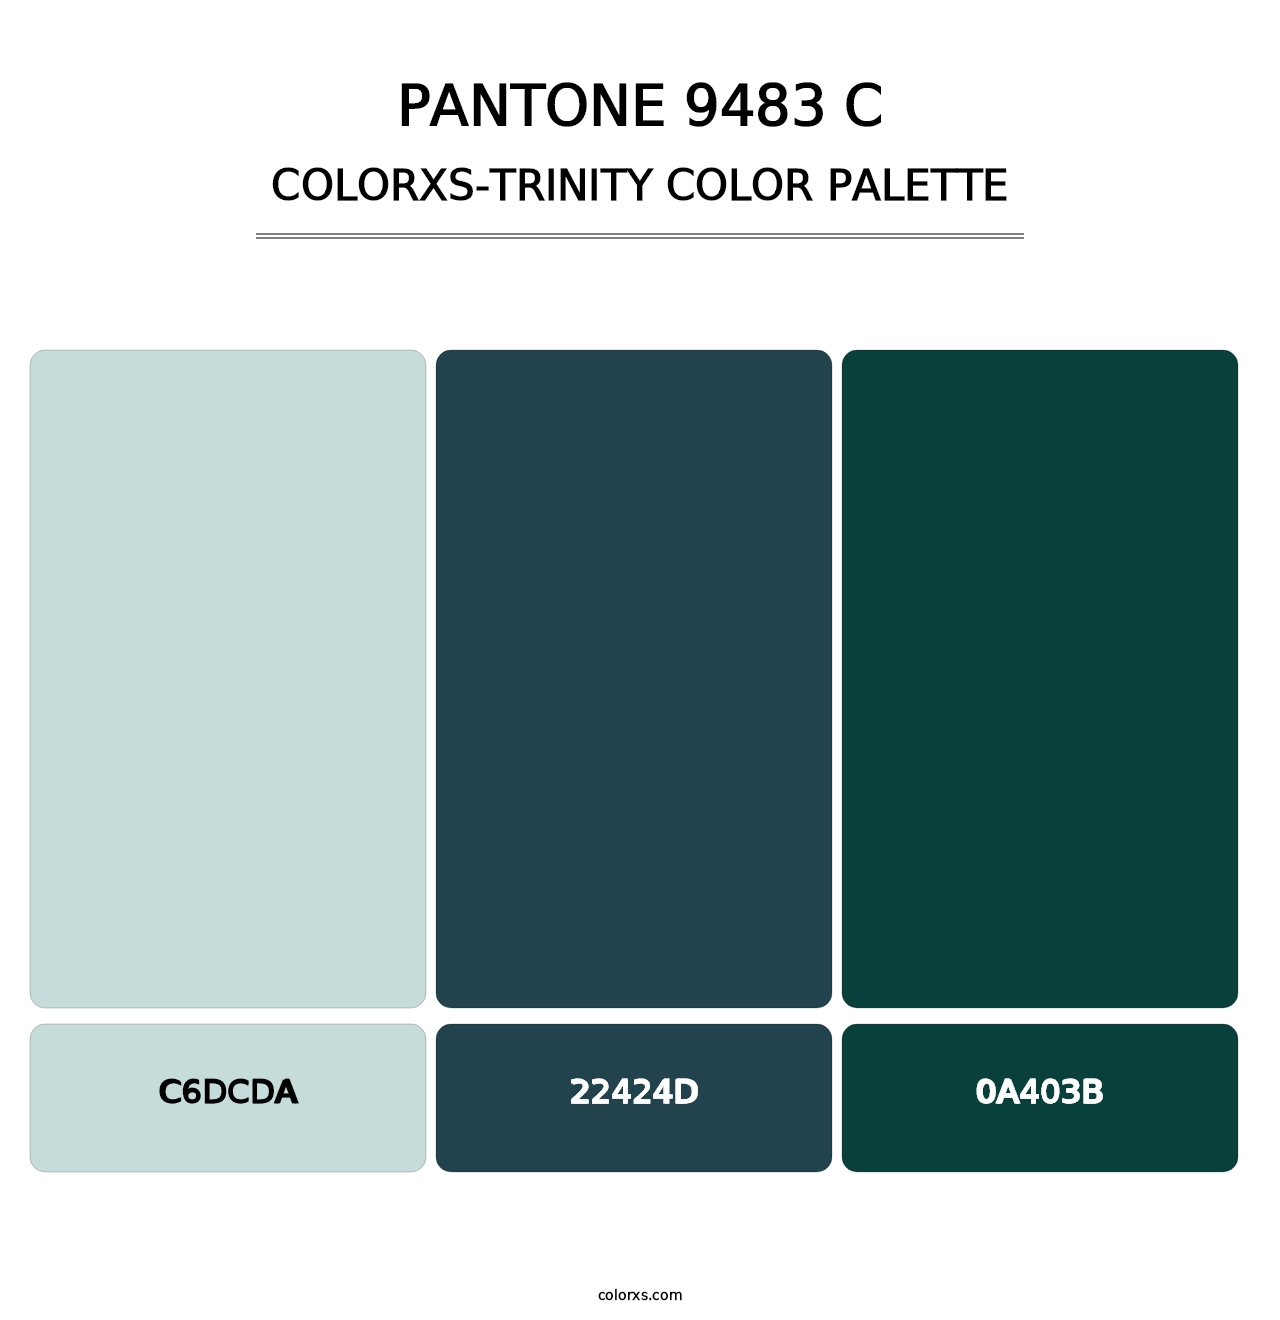 PANTONE 9483 C - Colorxs Trinity Palette